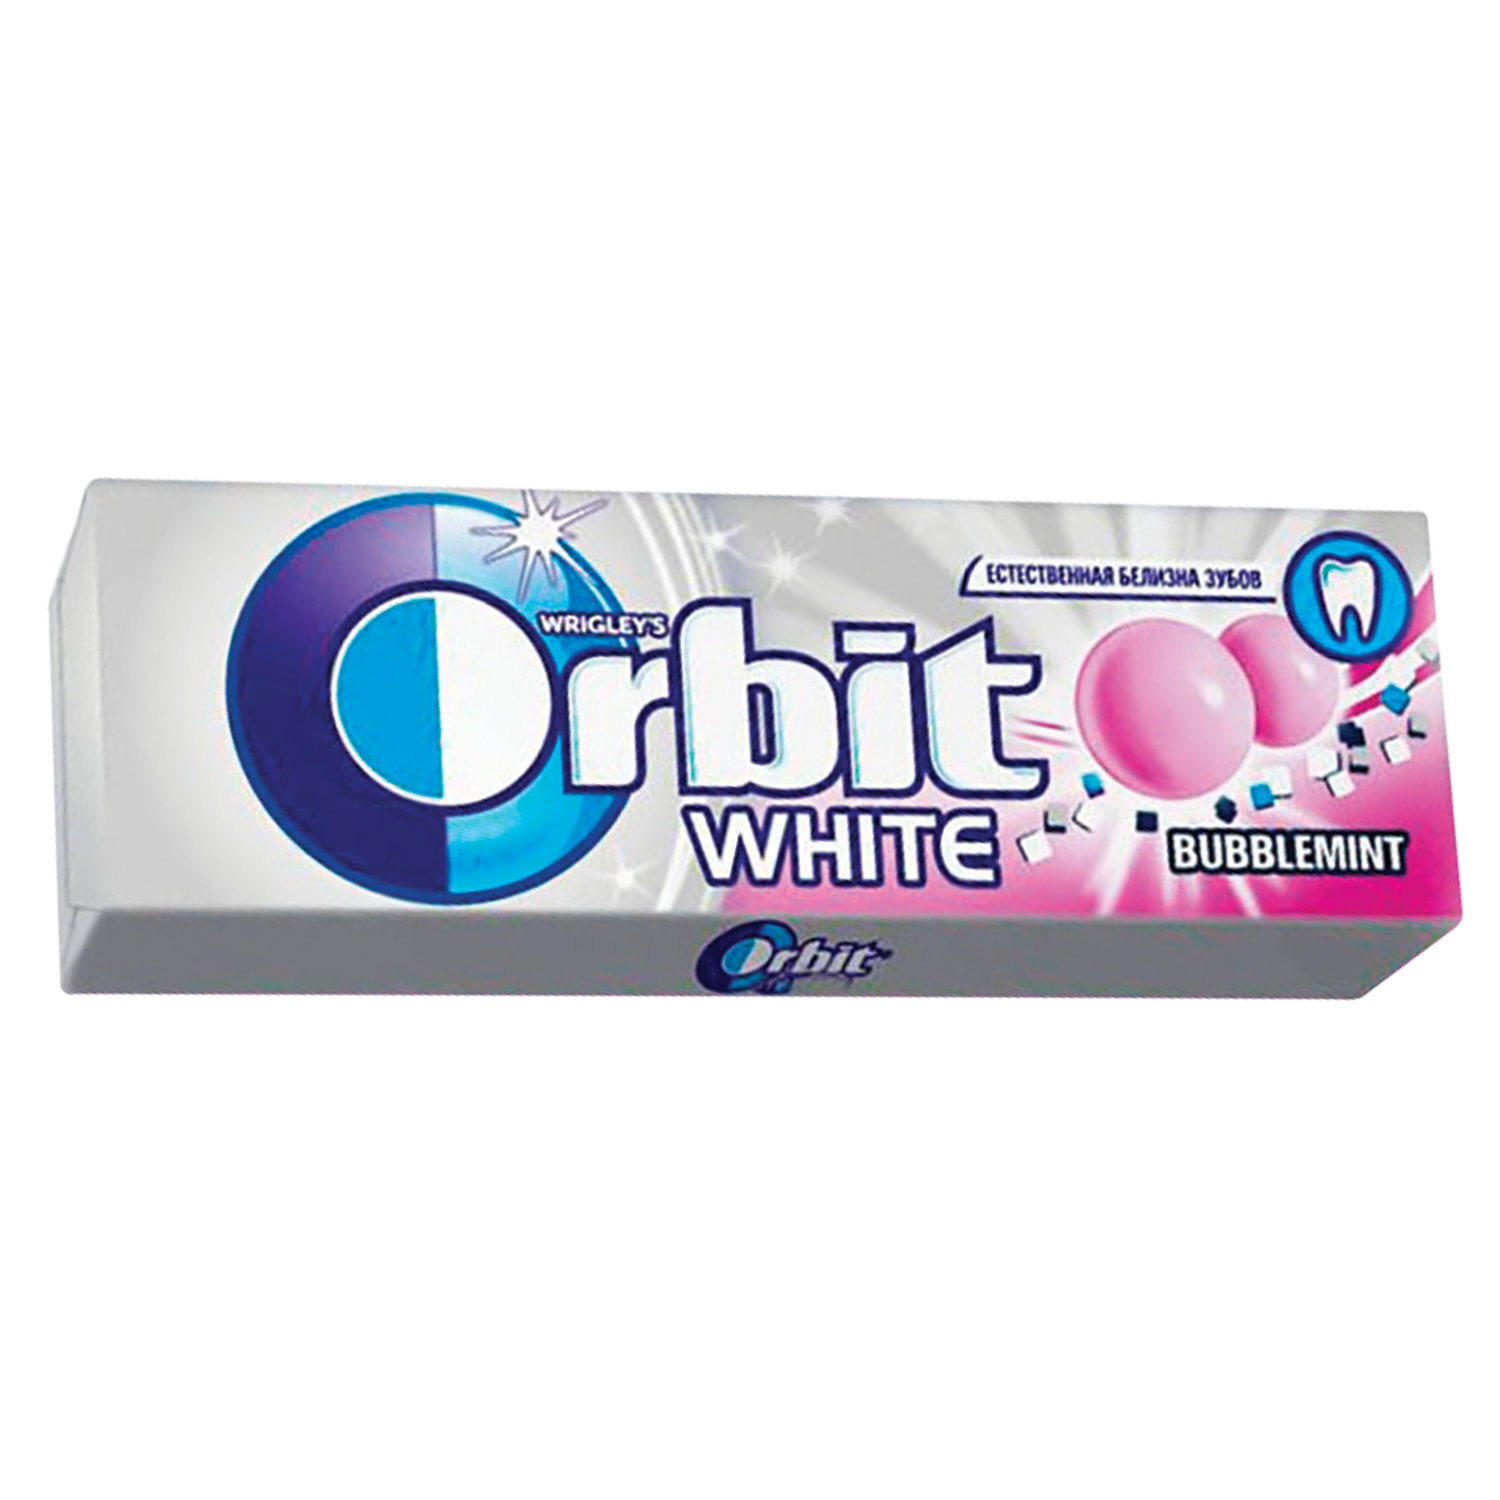 Orbit bubblemint. Жевательная резинка Orbit White Bubblemint, 13,6г. Резинка жевательная Orbit баблминт, 13.6г. Orbit жевательная резинка Bubblemint 13.6. Жев.резинка Orbit белоснежный Bubblemint 13,6г.